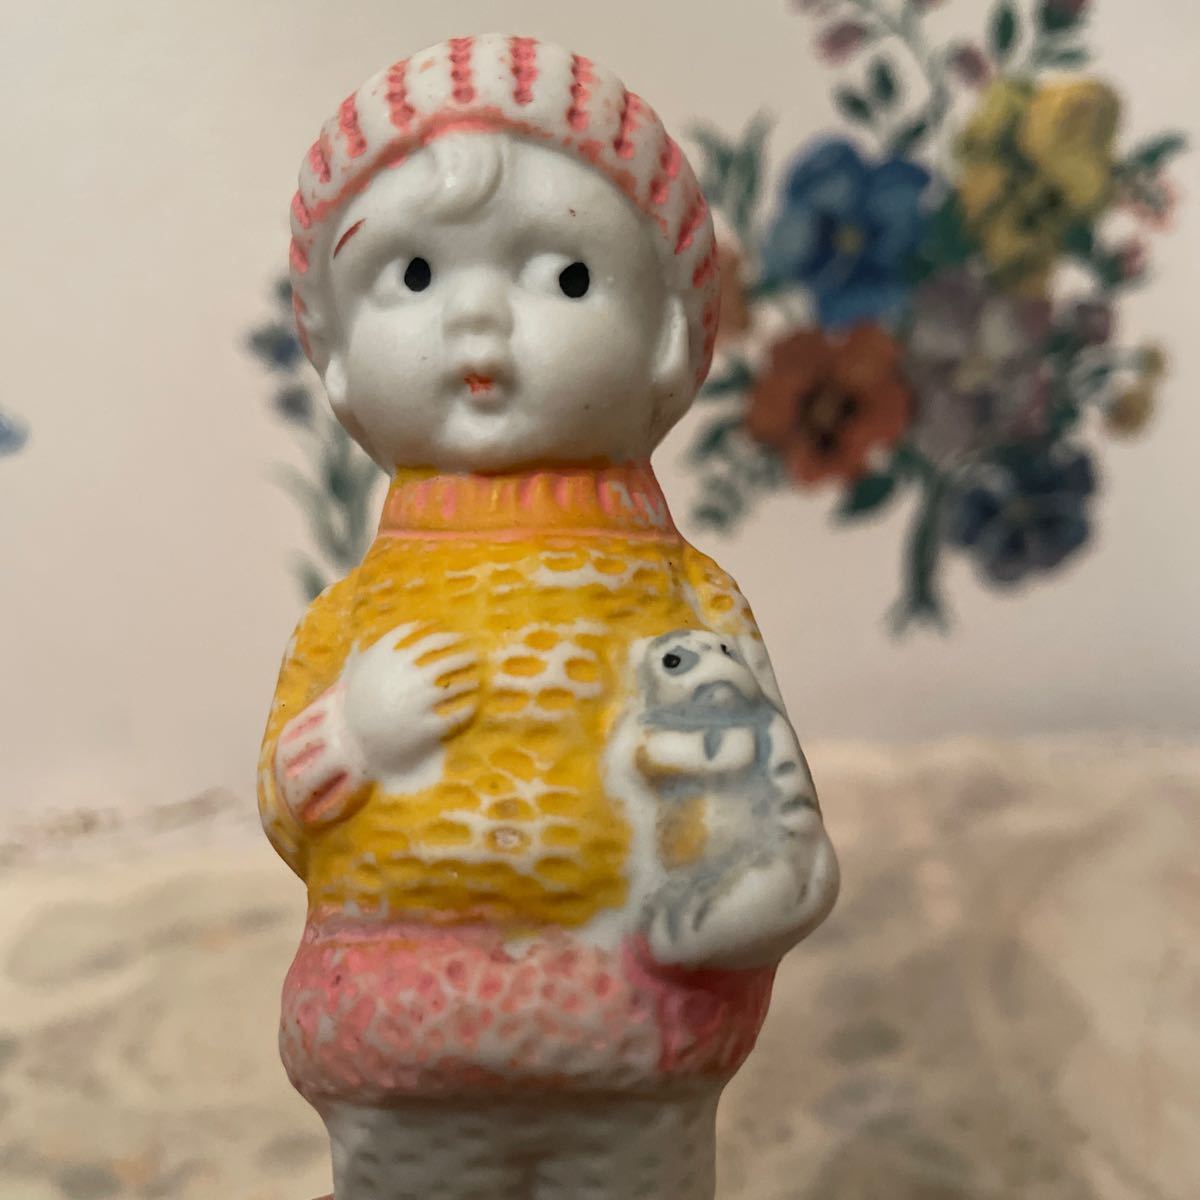  Vintage bisque doll doll ceramics retro antique Vintage made in Japan 